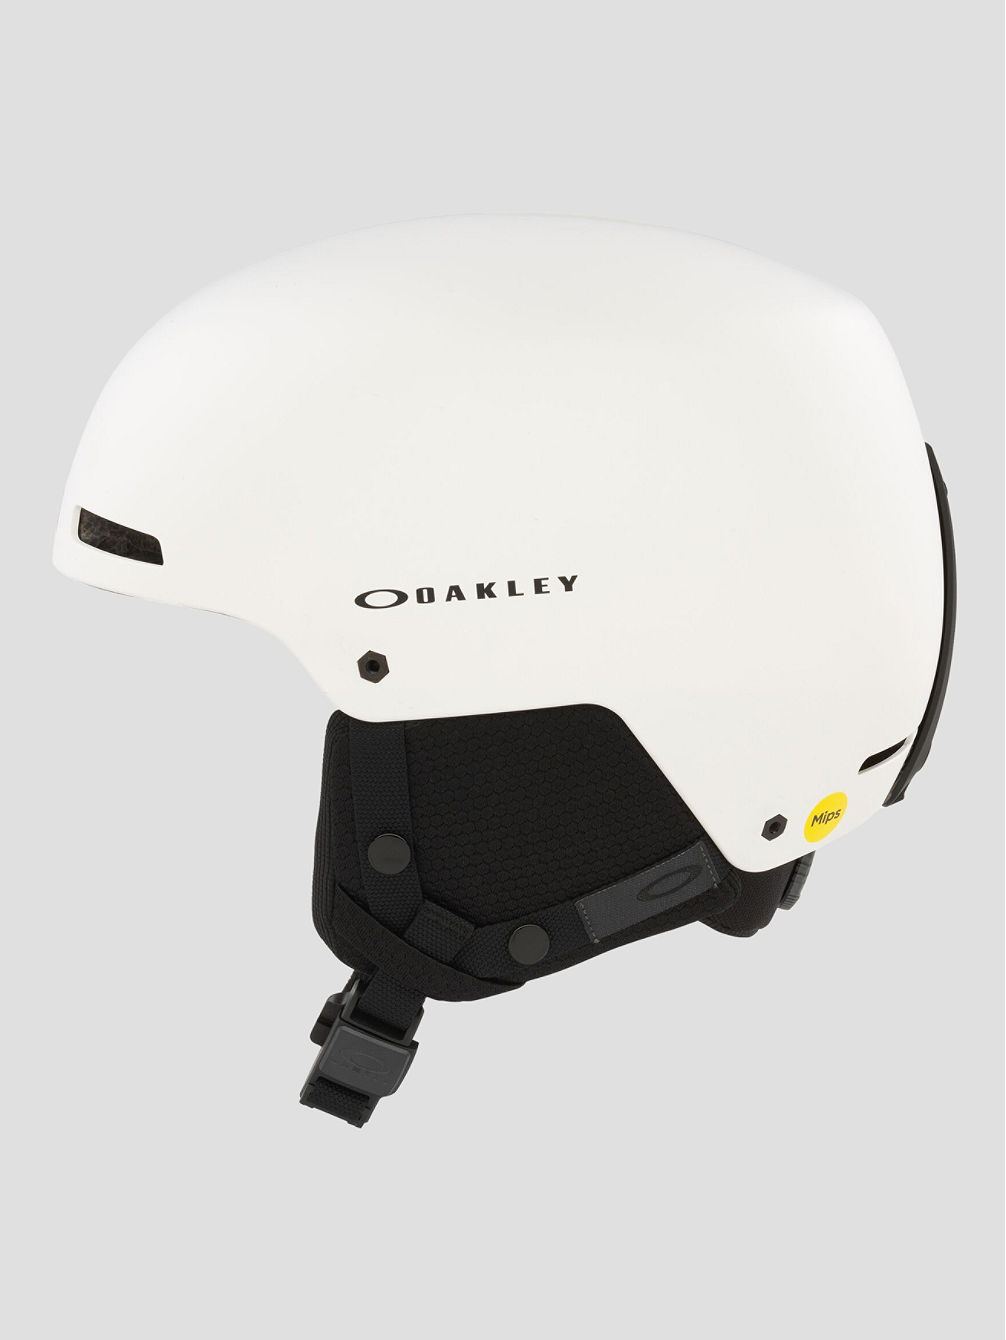 Mod1 Pro Helmet